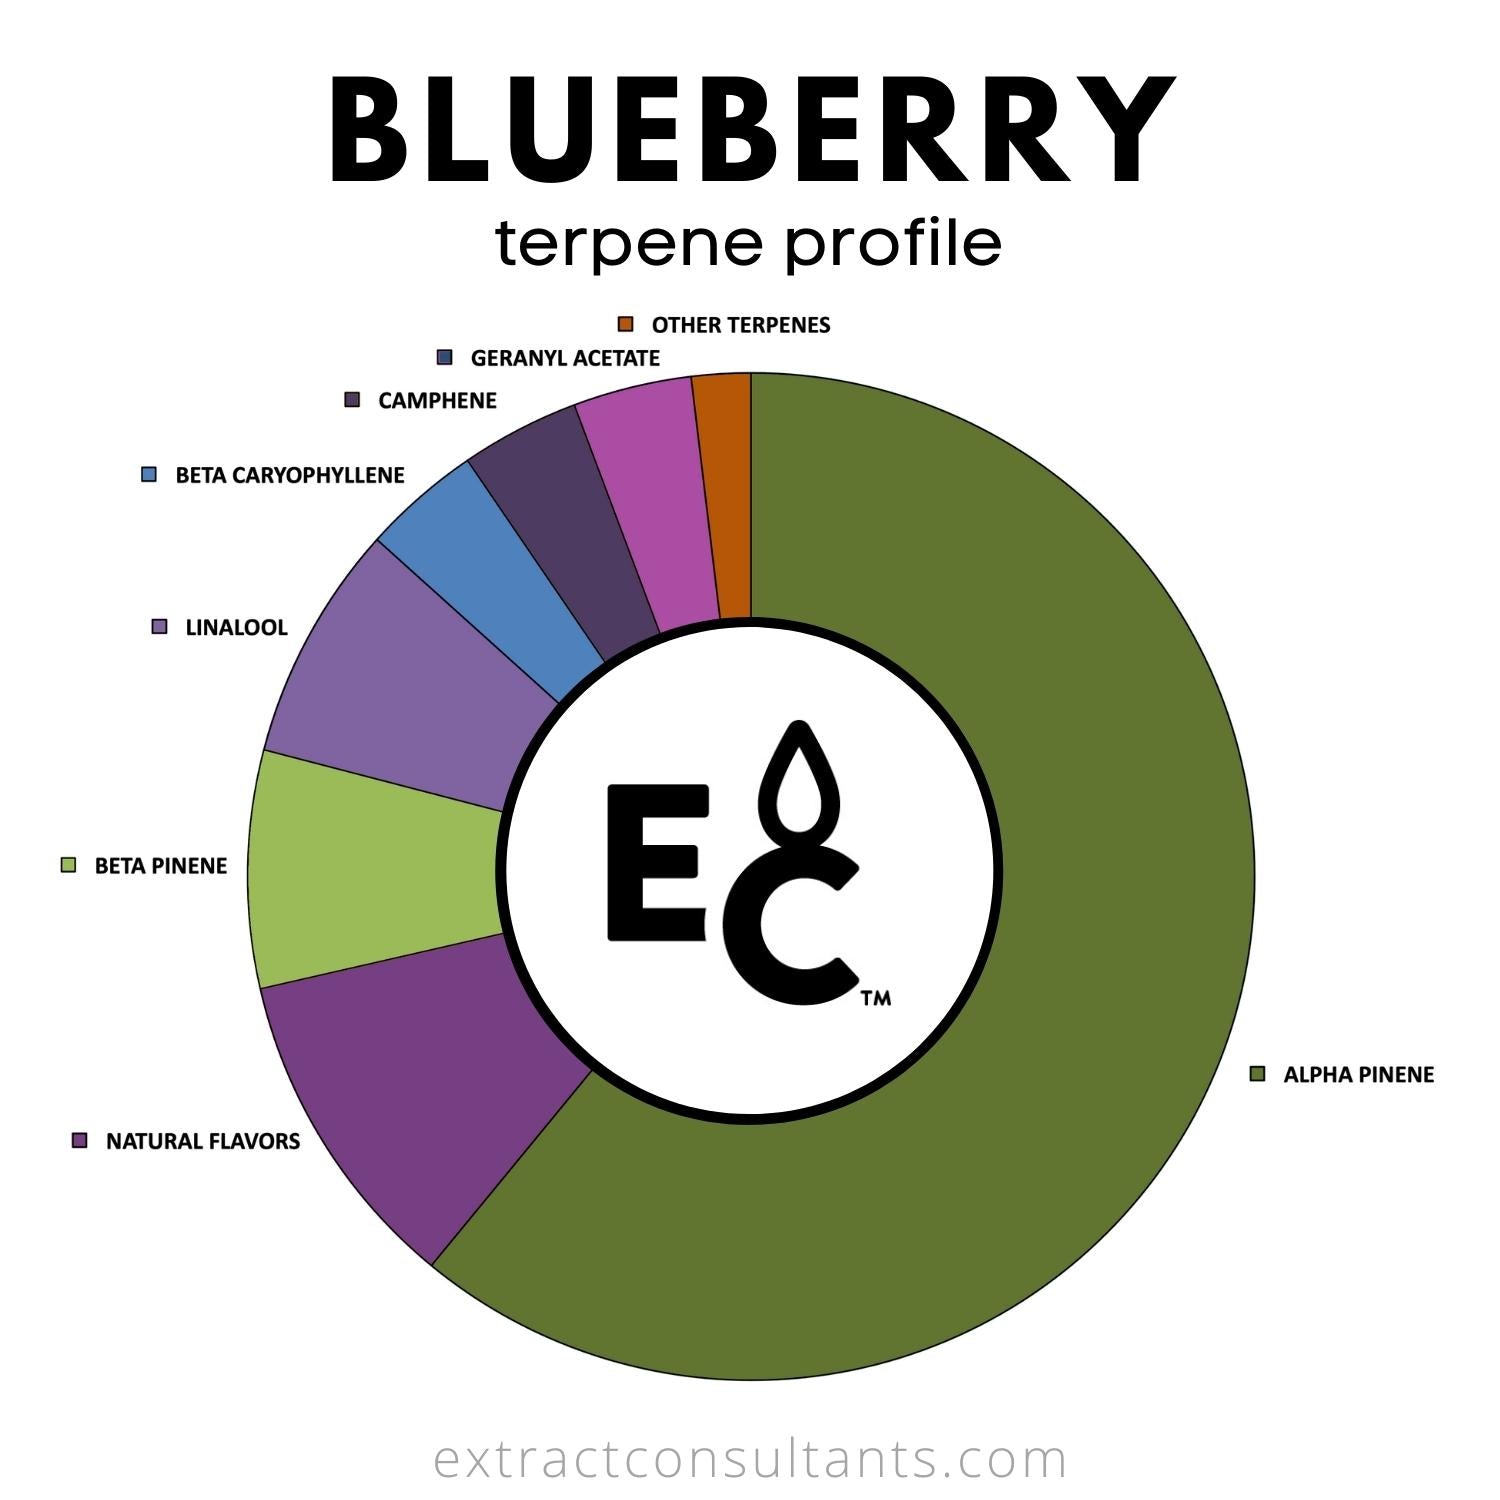 Blueberry terpene profile chart